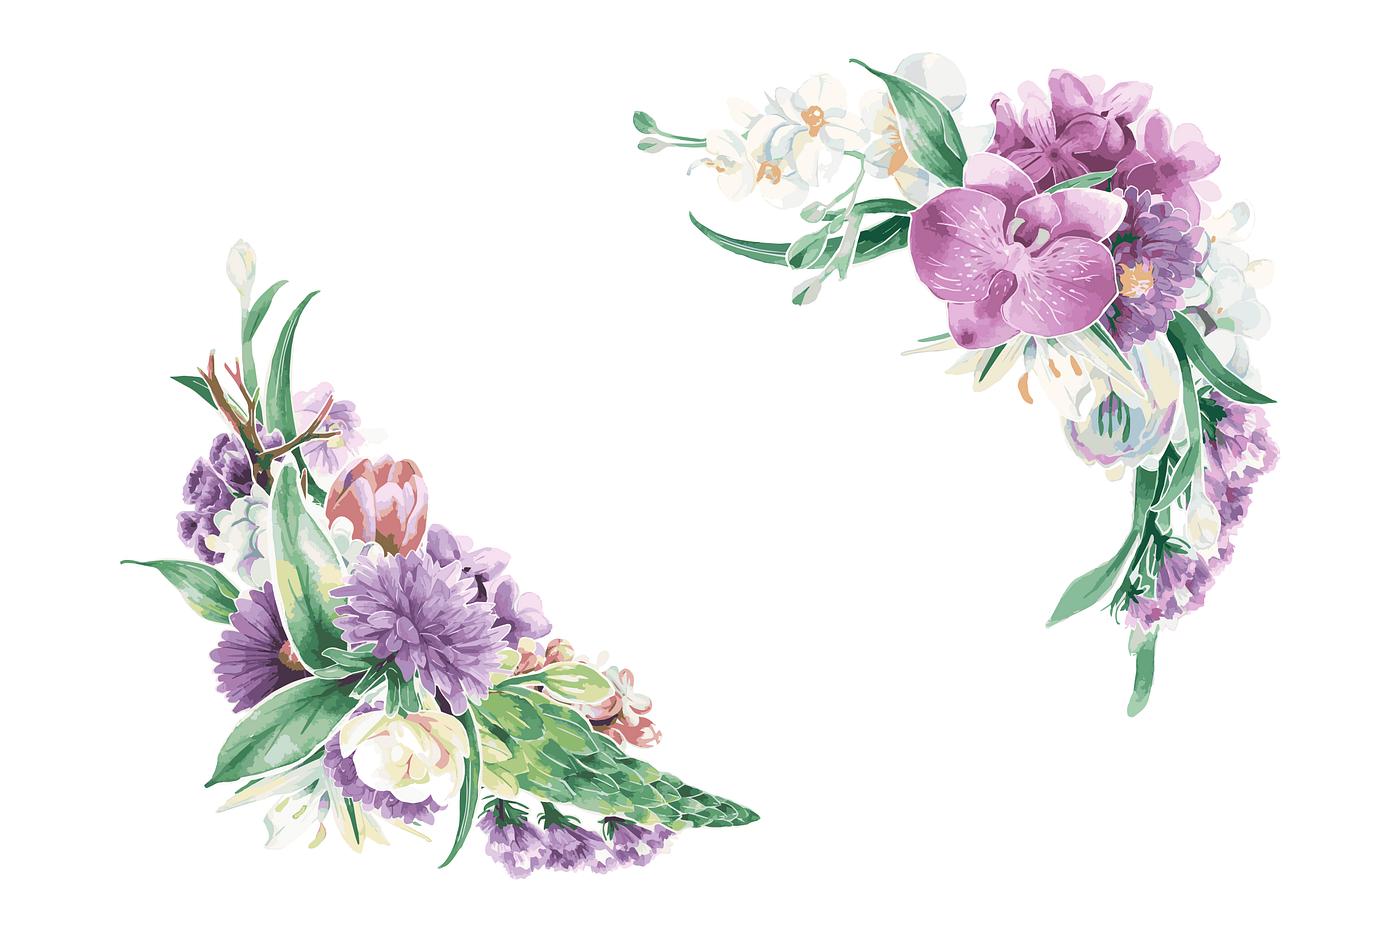 Download Vintage floral ornaments | Free stock vector - 381006